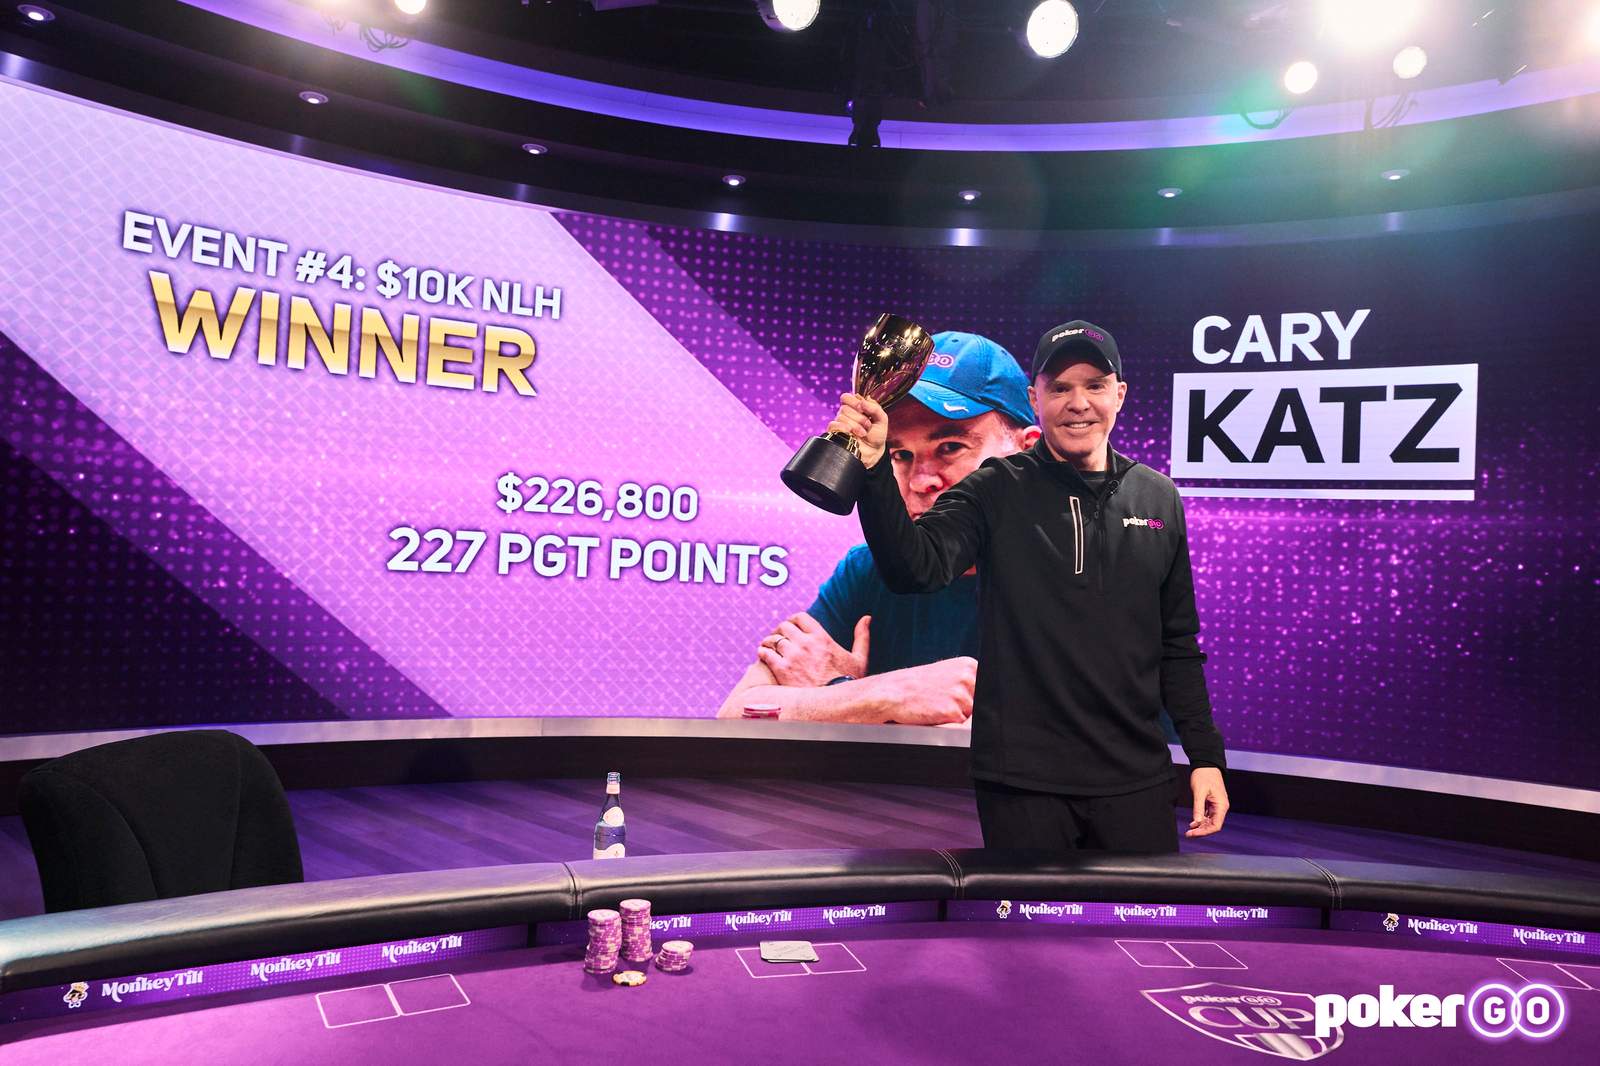 Cary Katz Wins Event #4: $10,100 No-Limit Hold'em for $226,800